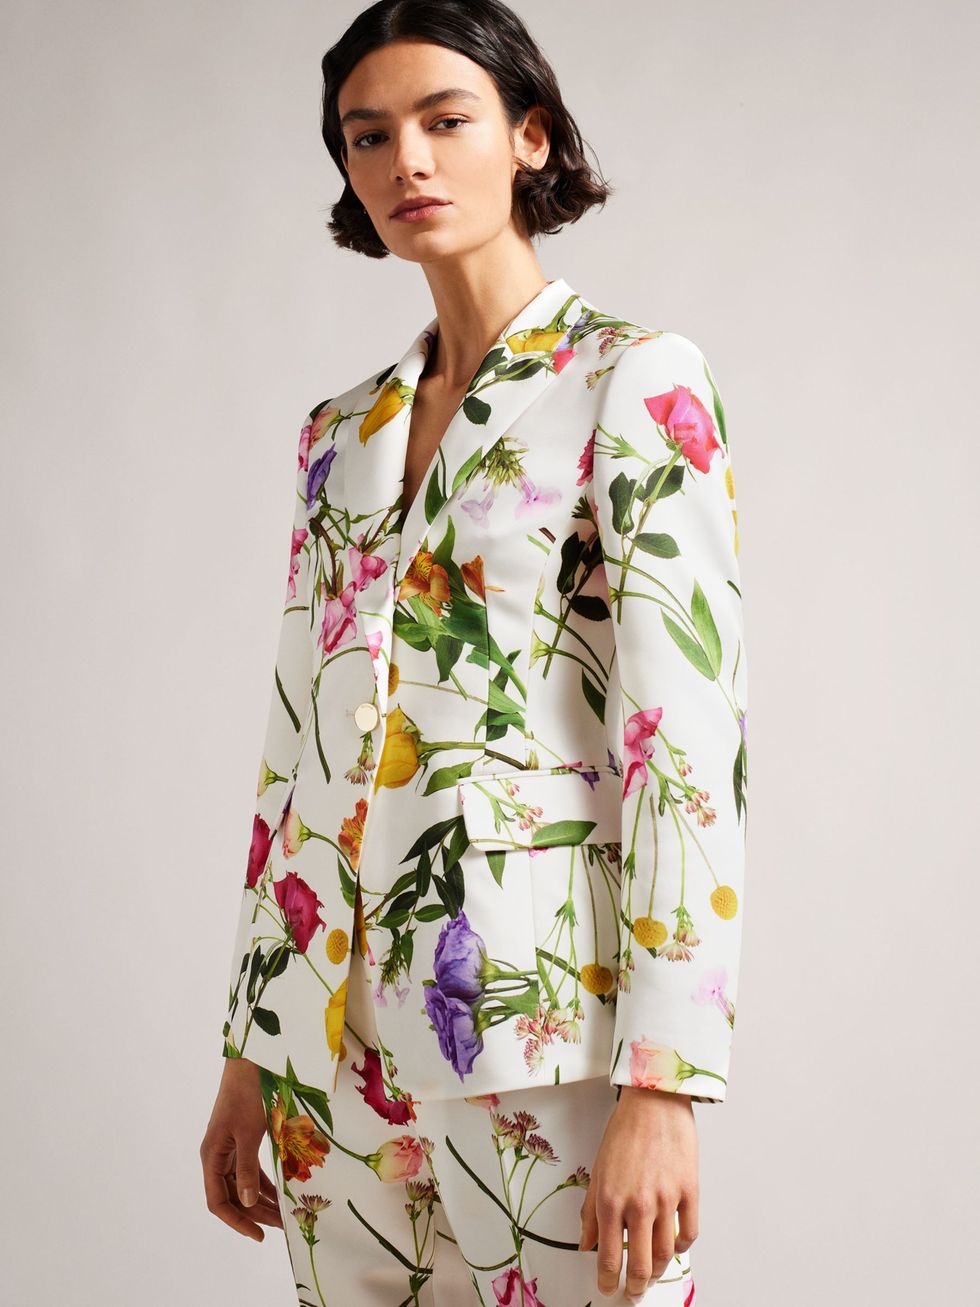 Alex Jones is chic in floral print Boden suit